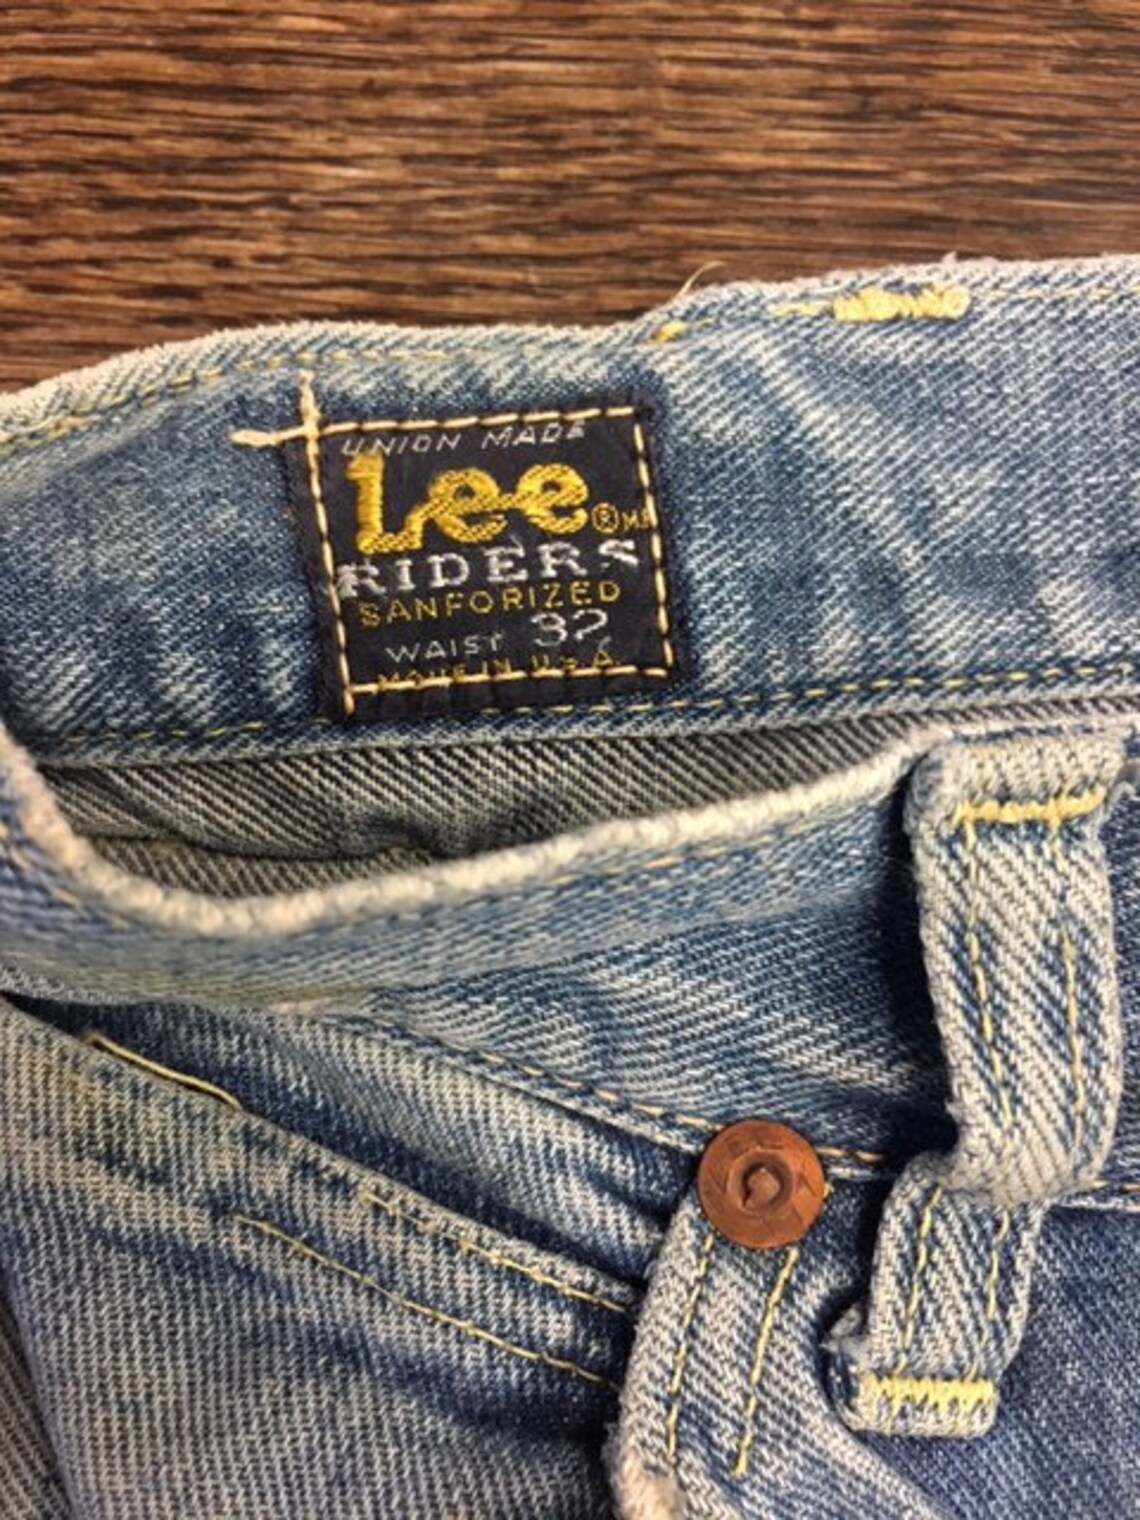 Men's Vintage Lee Riders Sanforized Jeans 32 Waist - Etsy